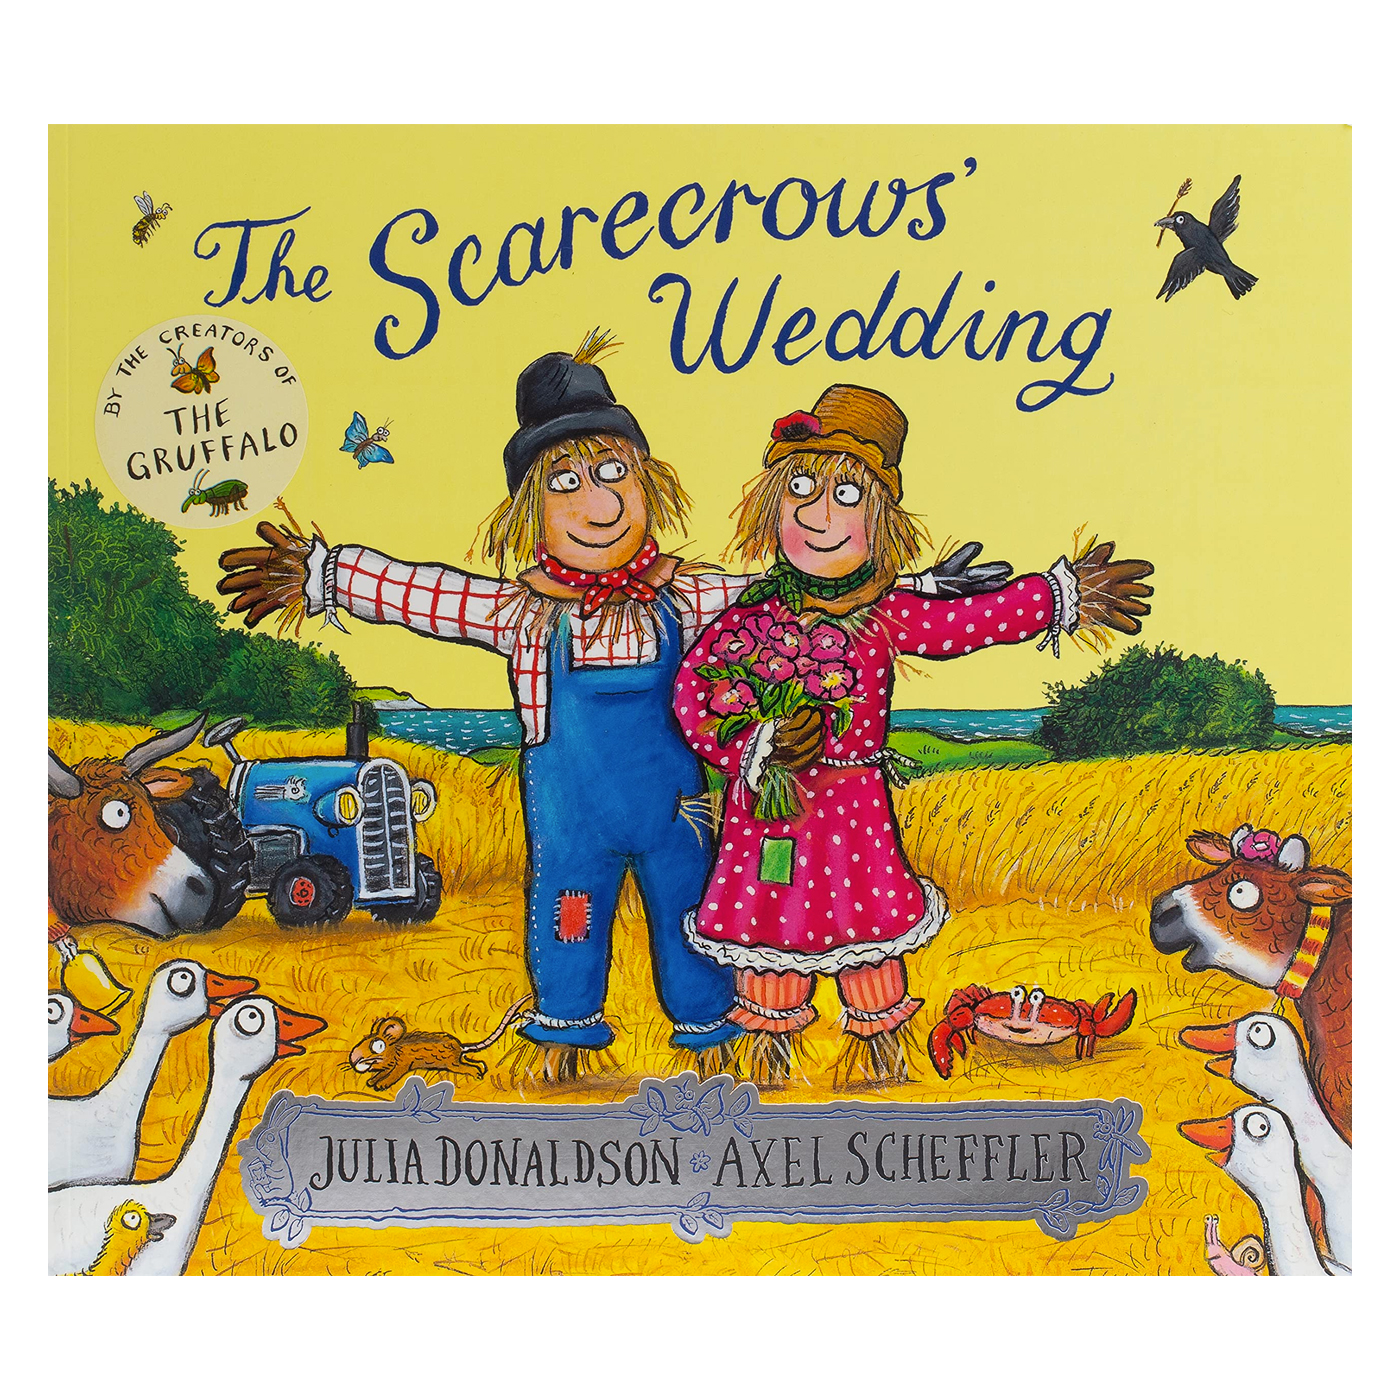  The Scarecrows Wedding